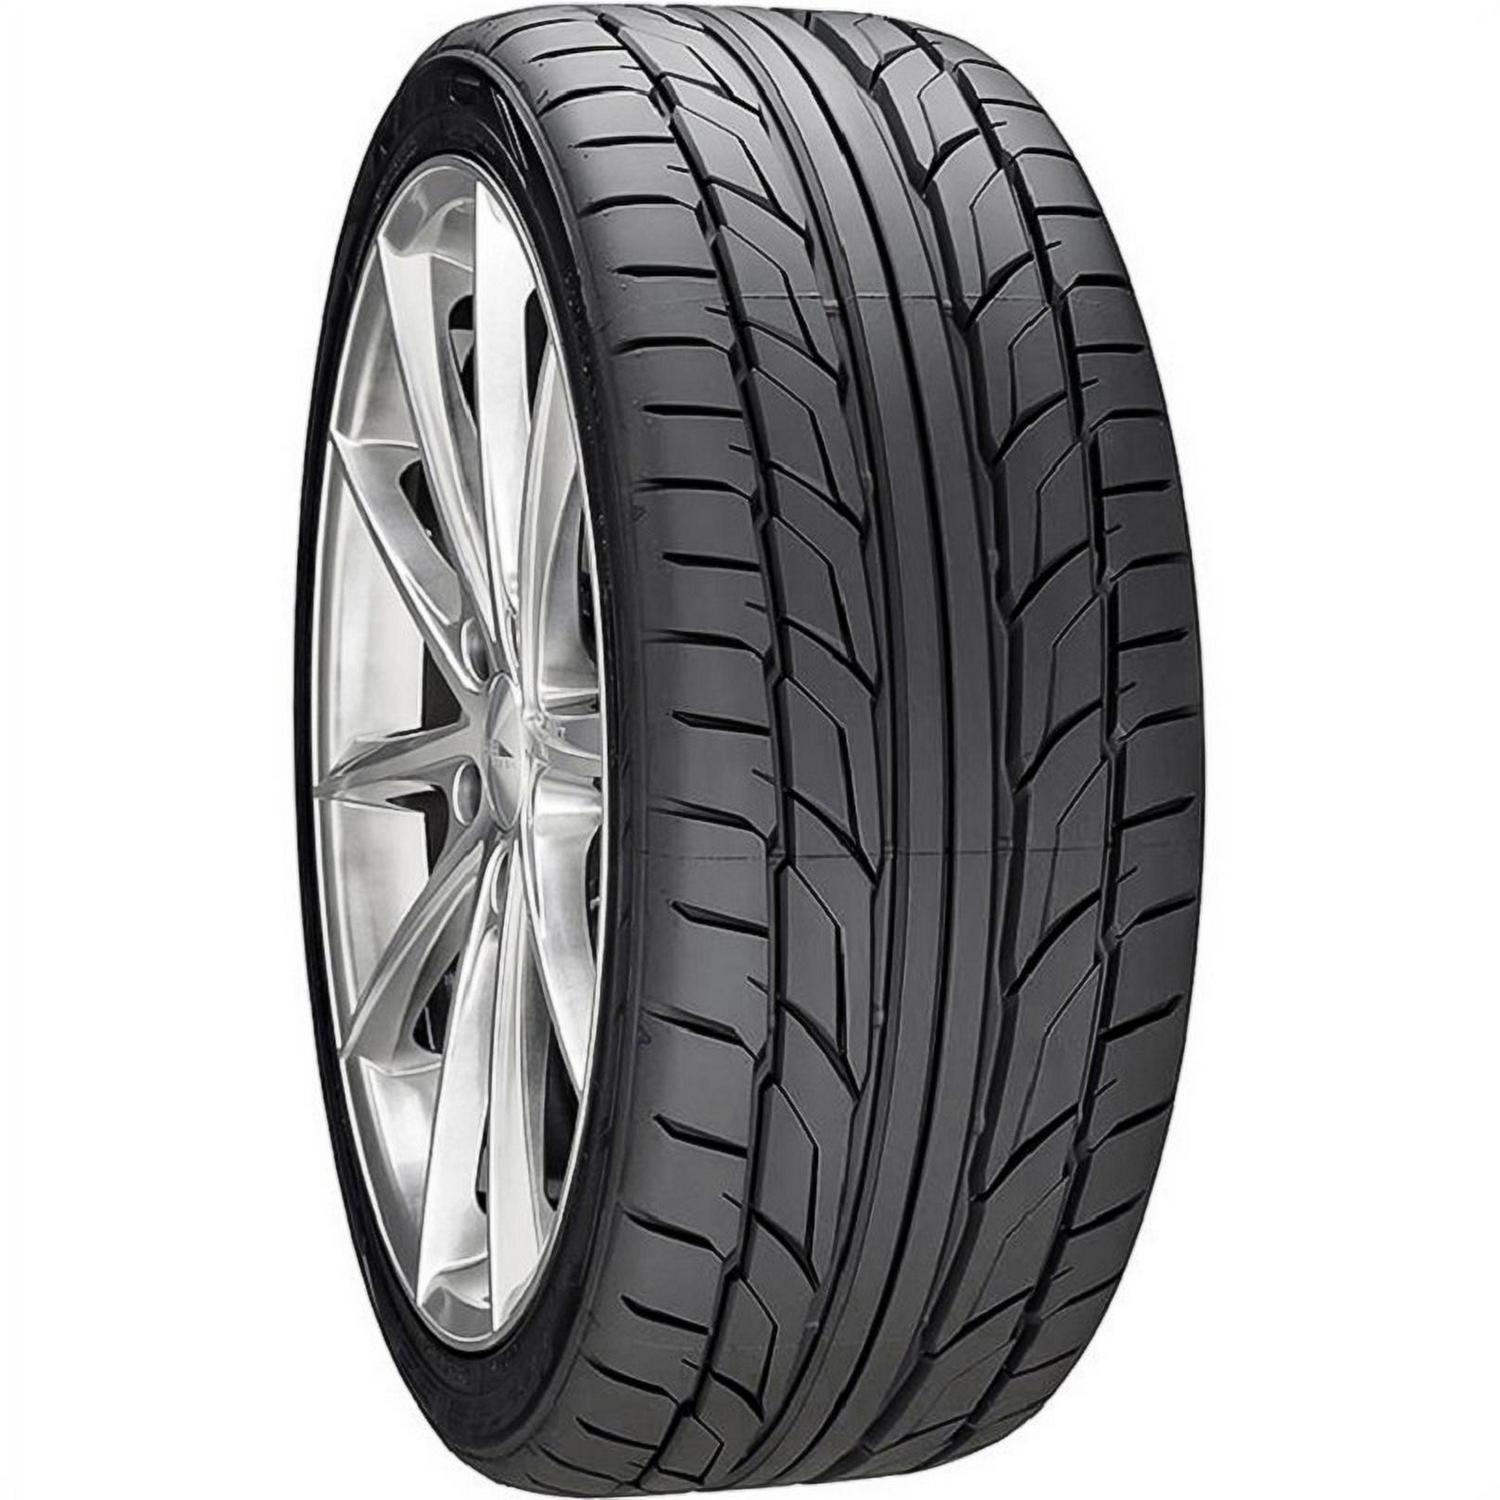 Nitto NT555 G2 225/45R17 ZR 94W XL High Performance Tire